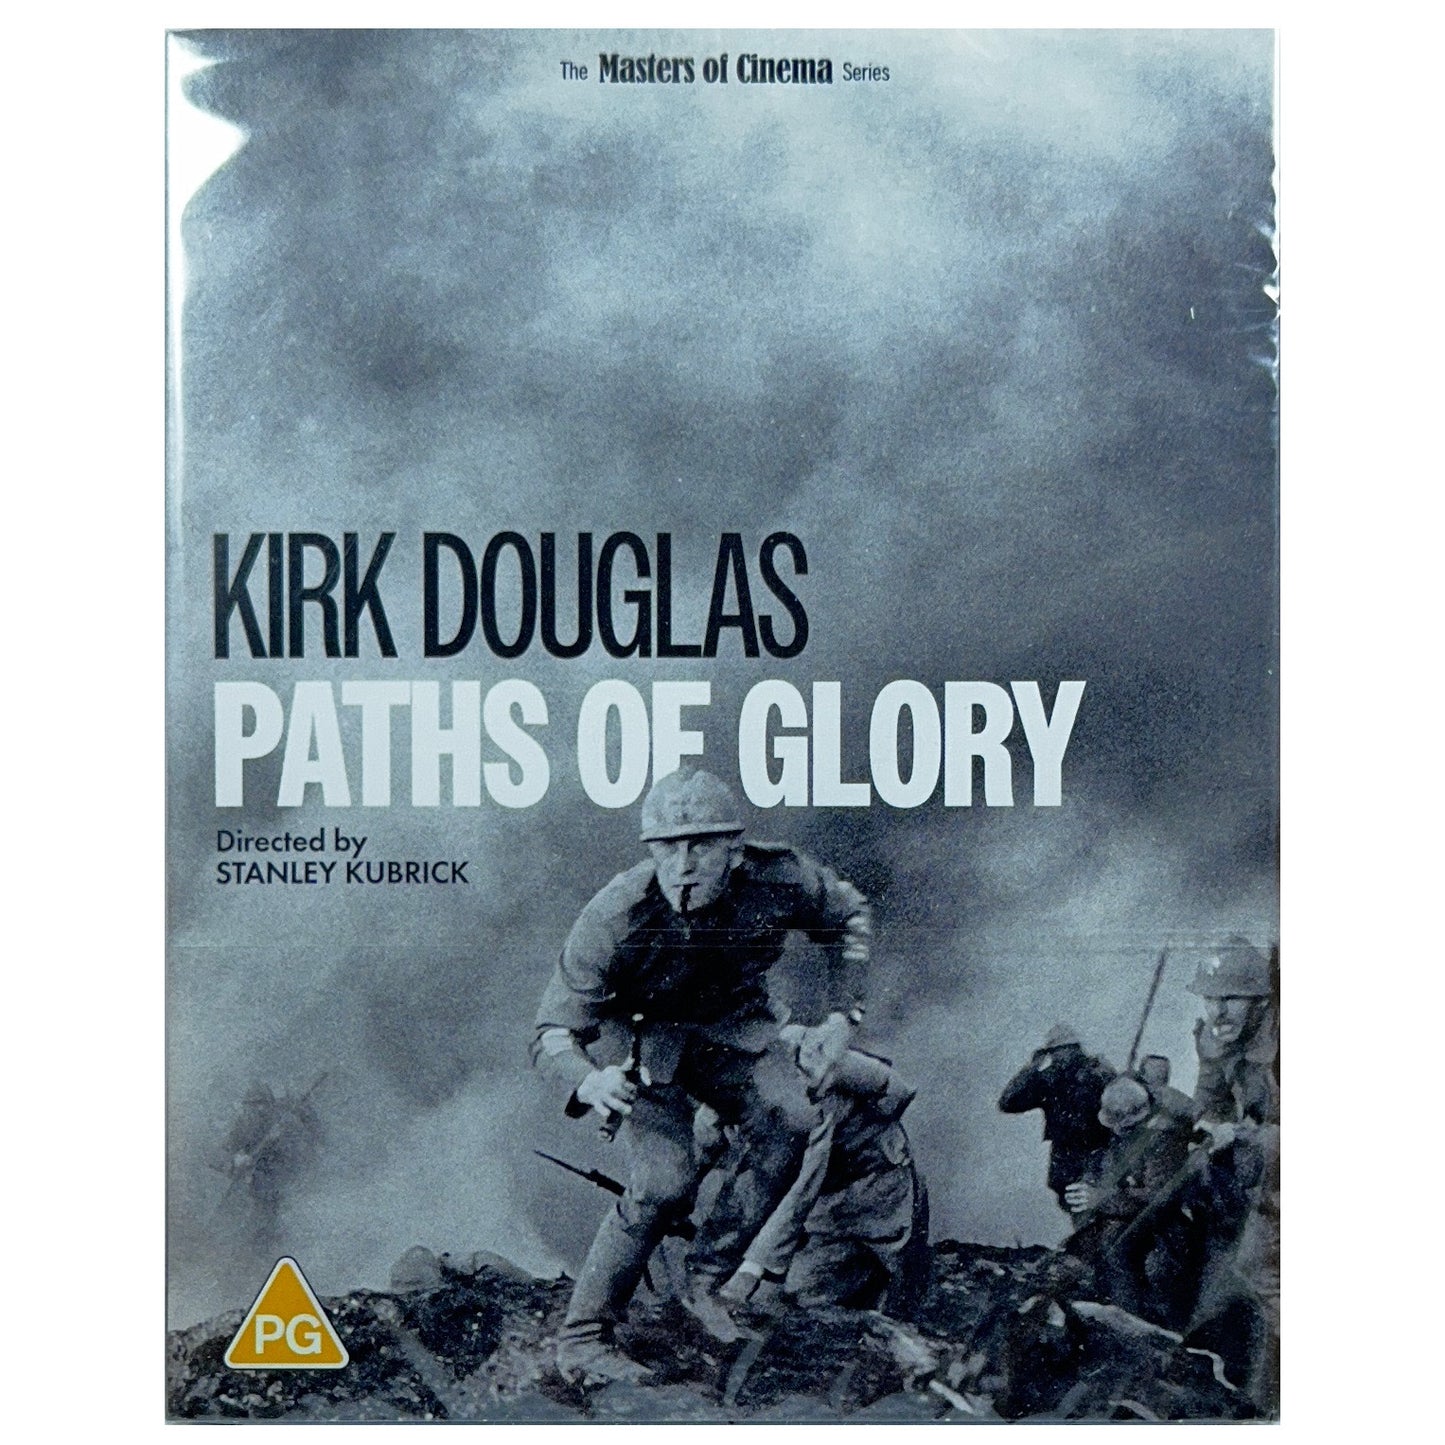 Paths of Glory 4K Ultra-HD Blu-Ray - Limited Edition